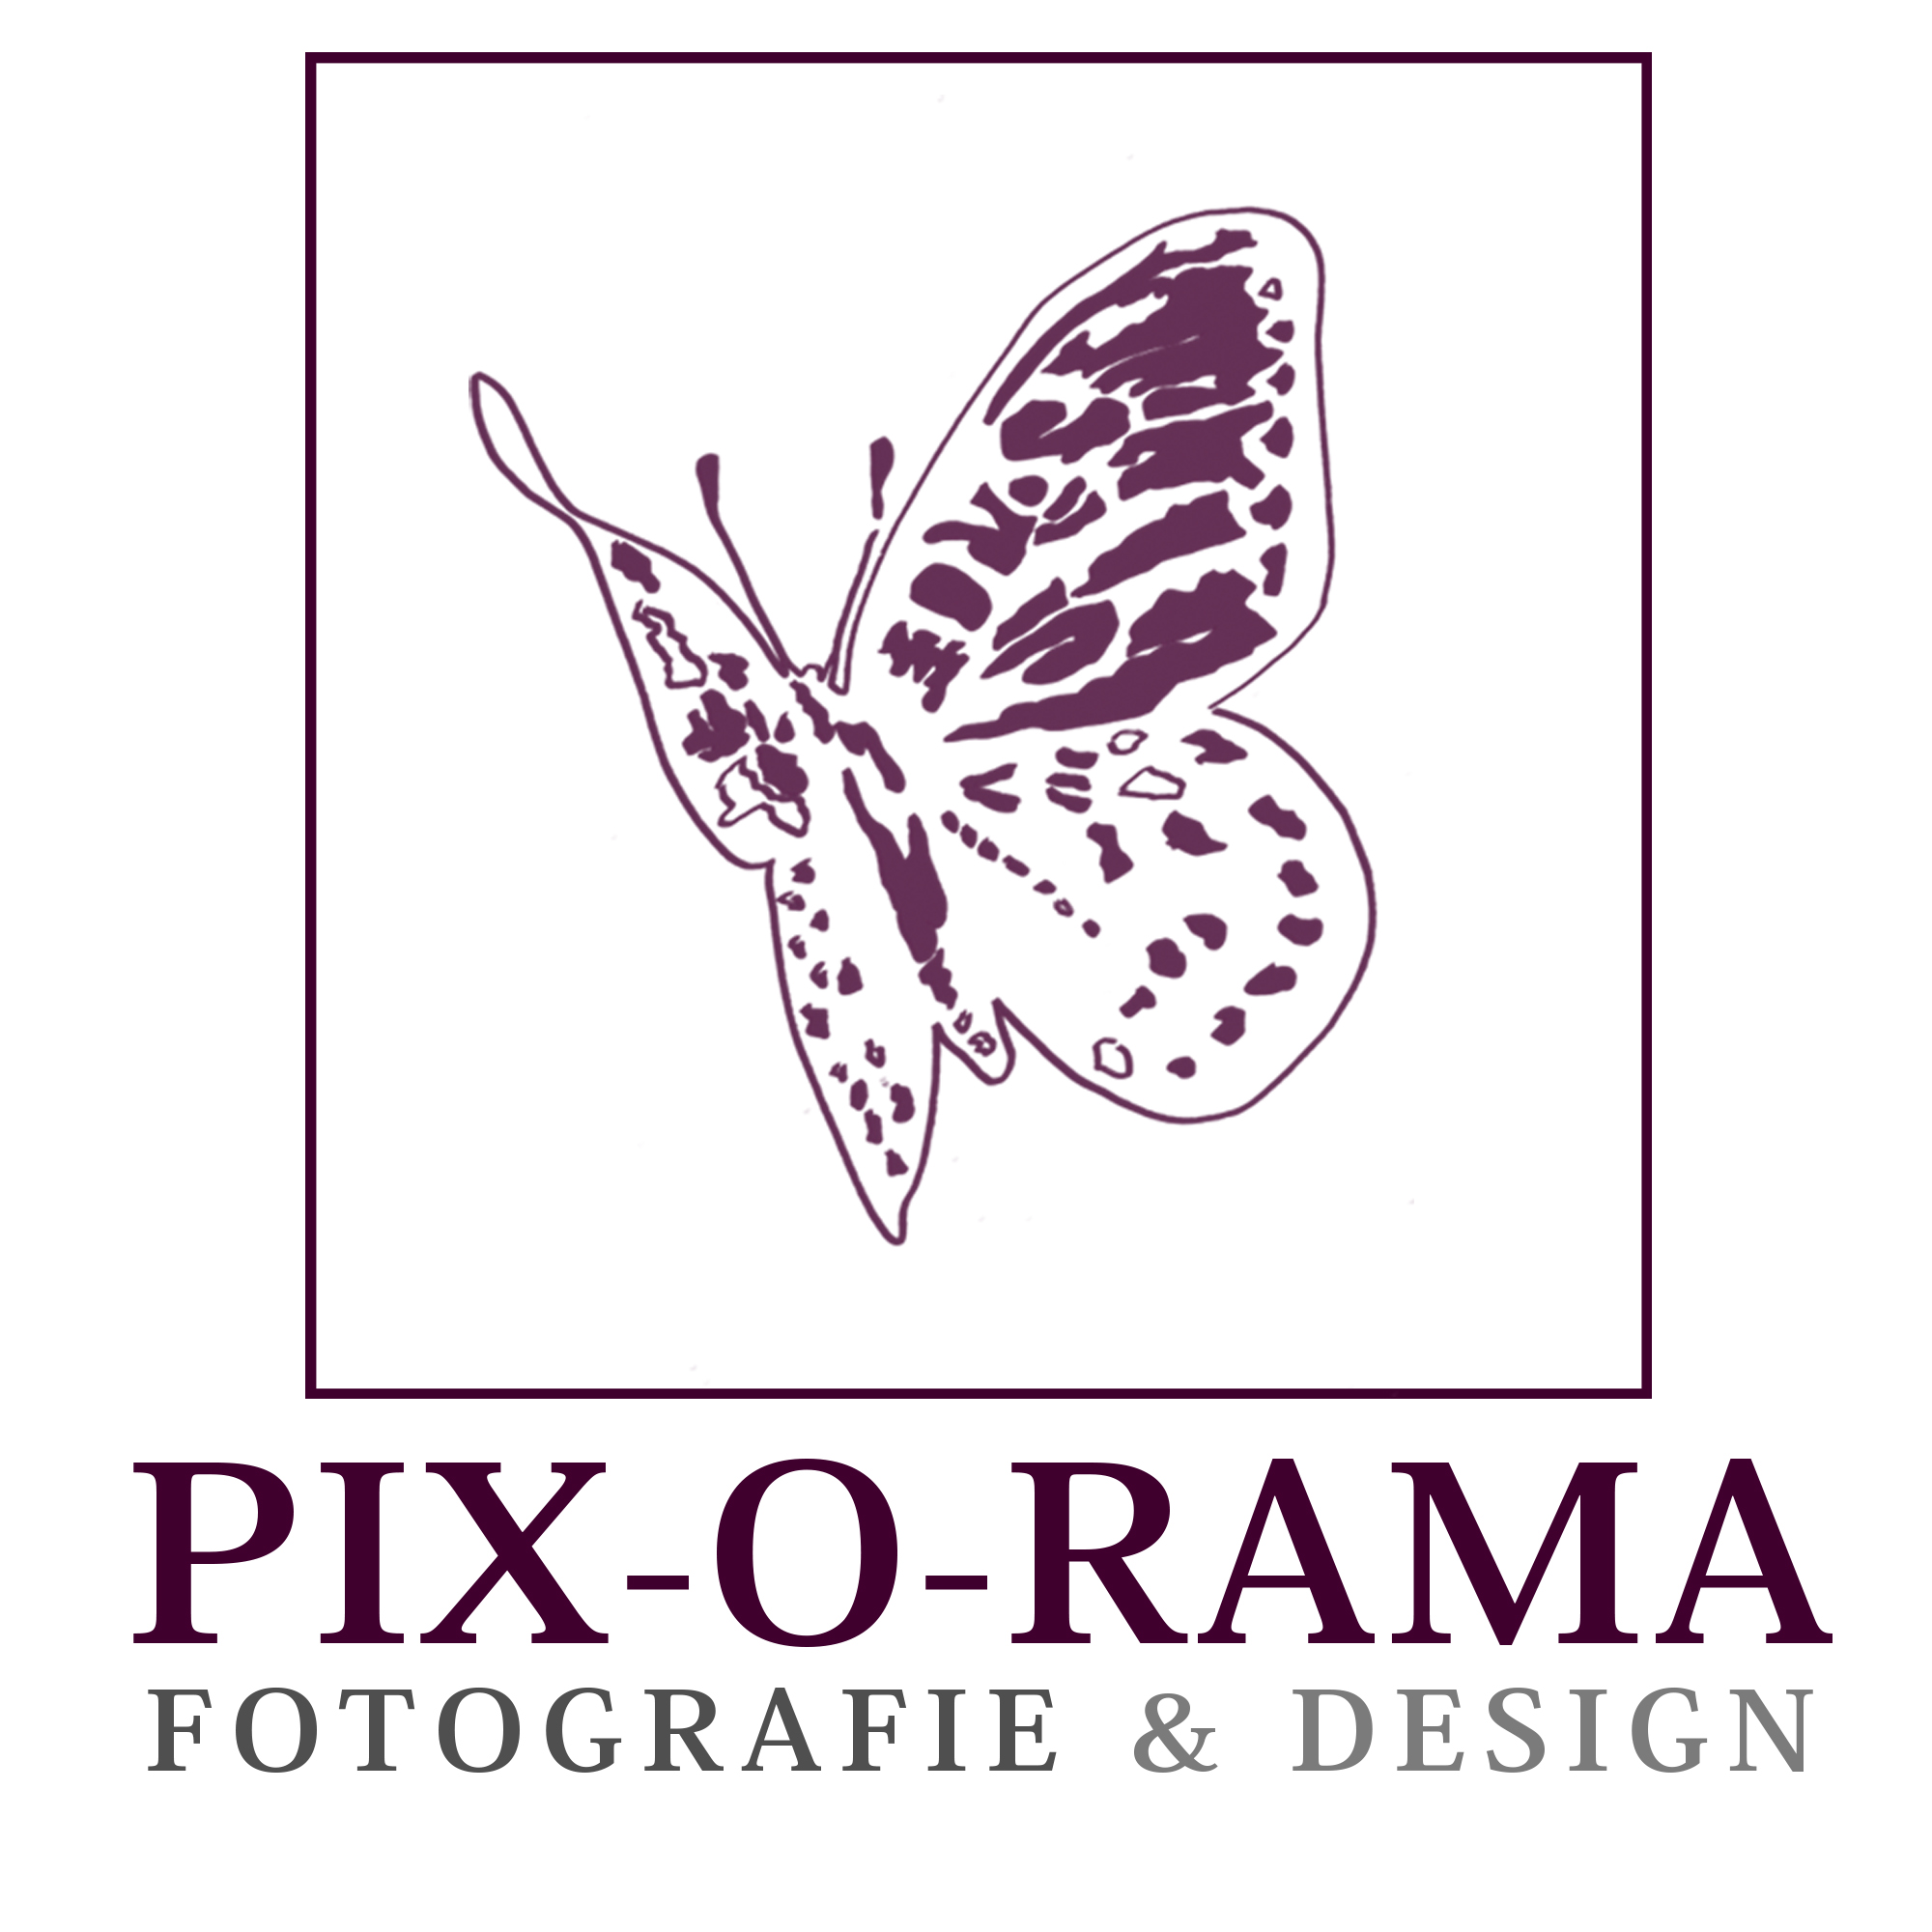 PIX-O-RAMA Fotografie und Design & Sabine Mundra